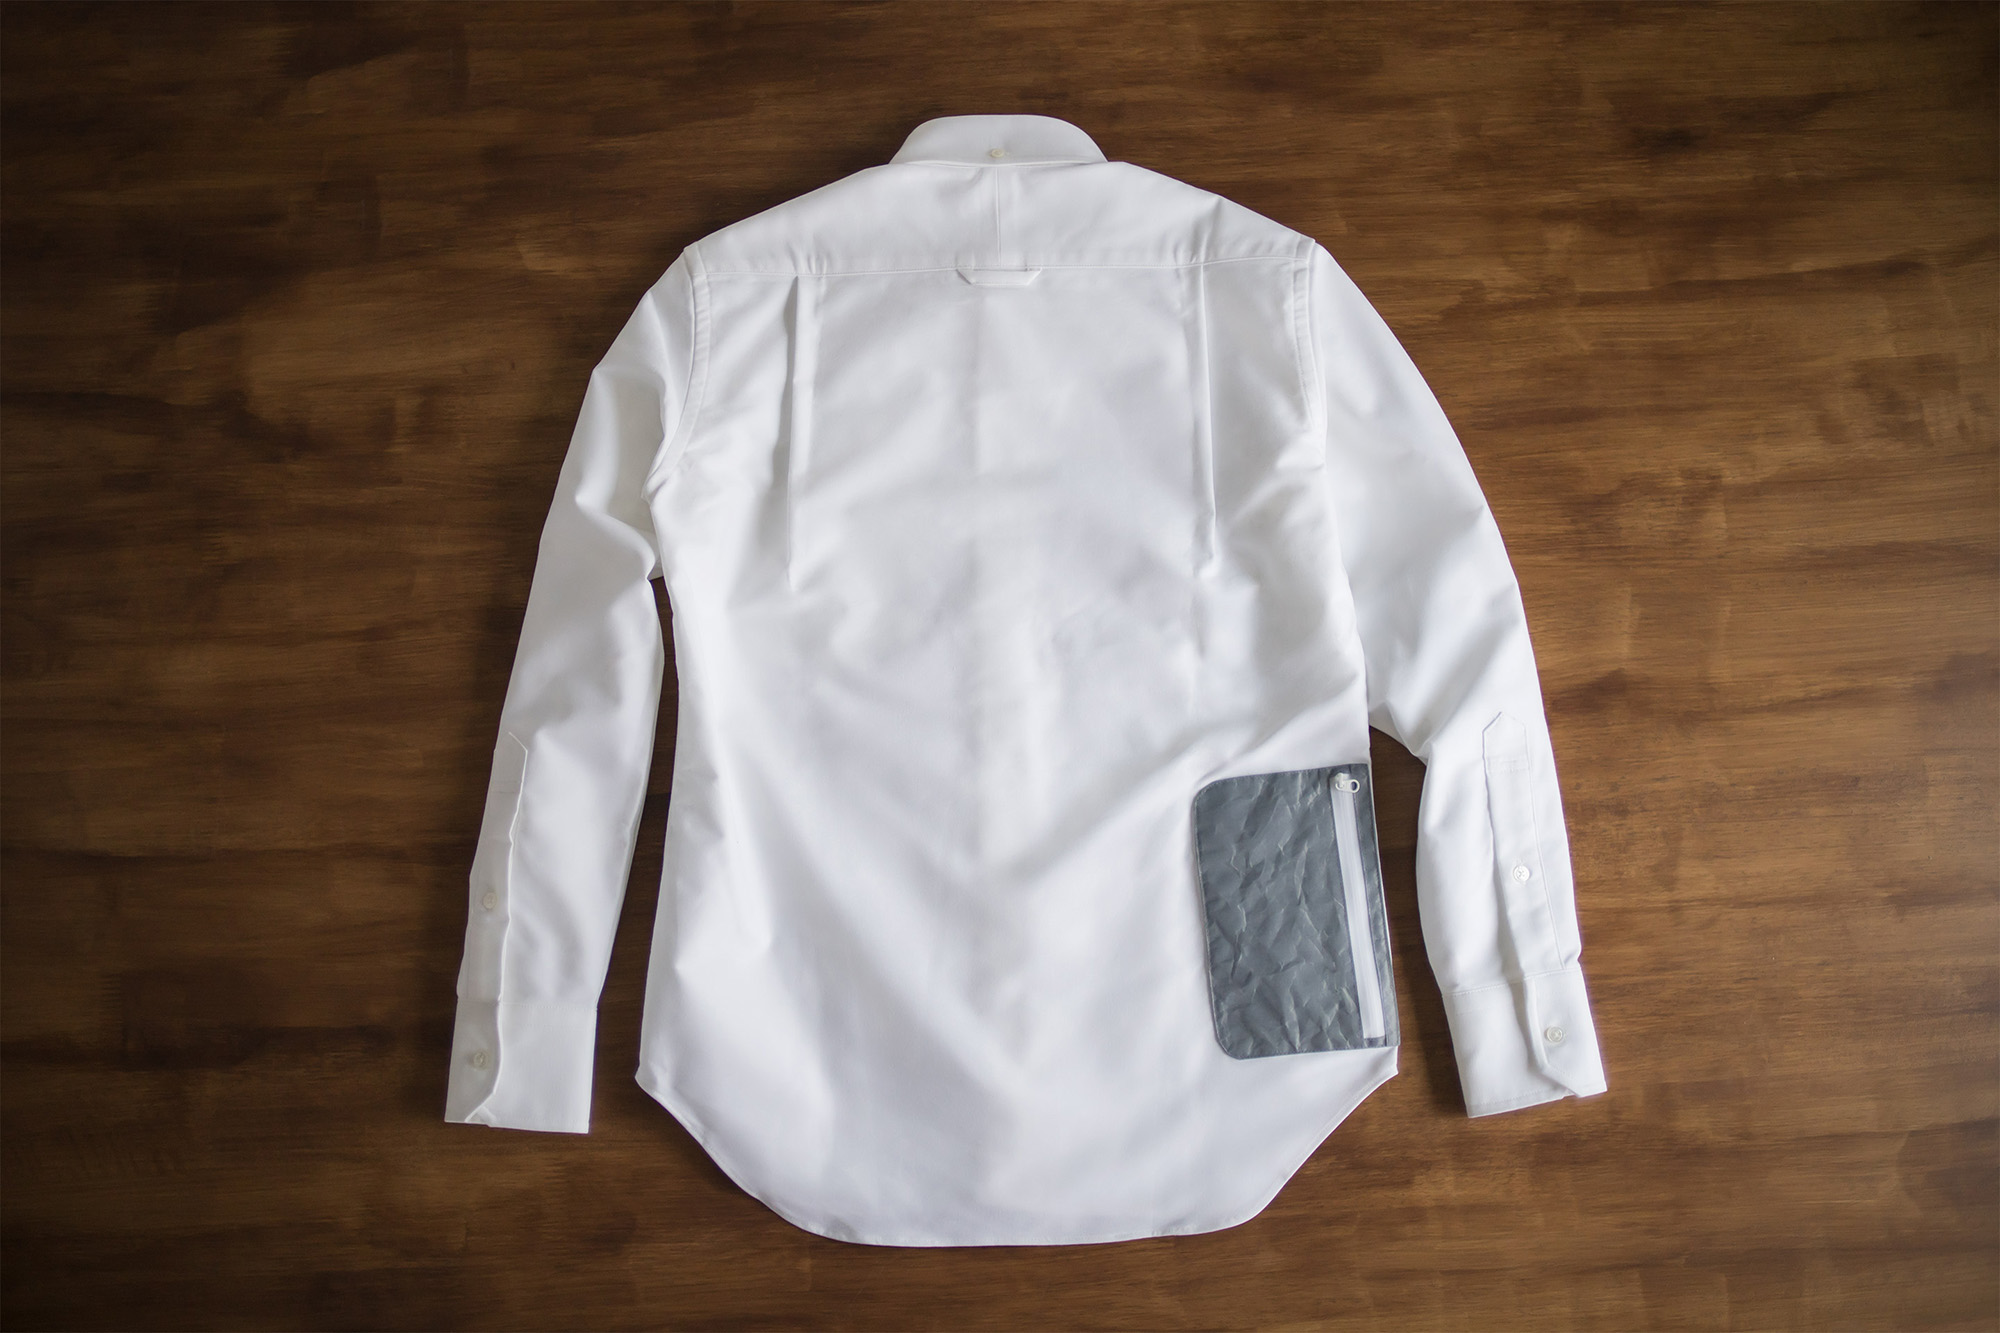 NEXTRAVELER TOOLS Gray Pocket With Non-Iron Travel Shirt